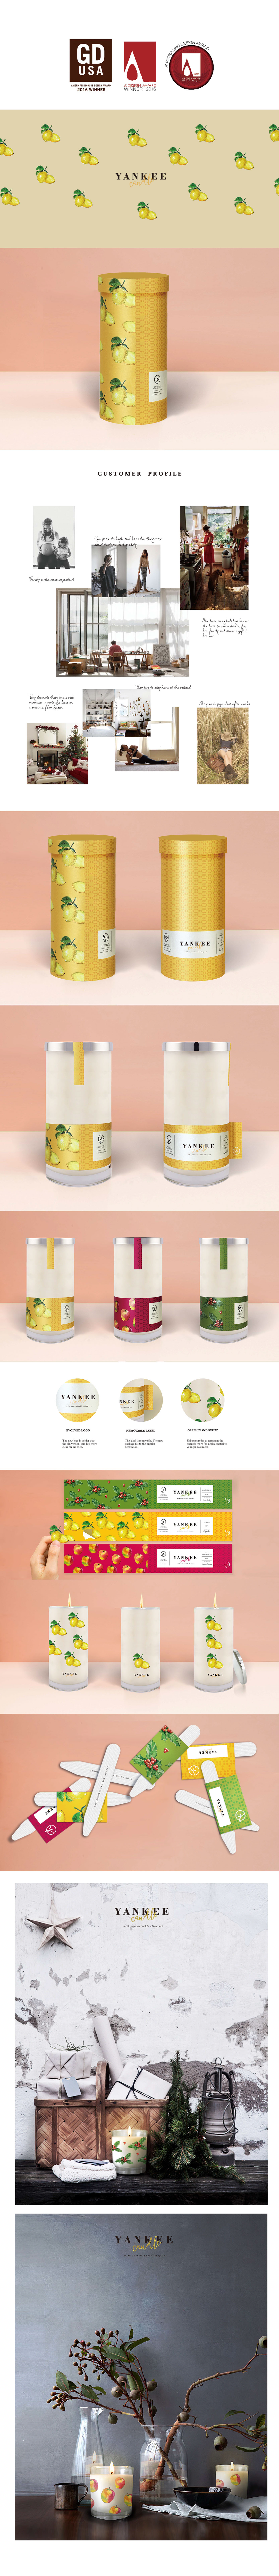 sub-brand strategies yankeecandle packagedesign pratt adesignaward gdusa prattcomd Rebrand candle Packaging